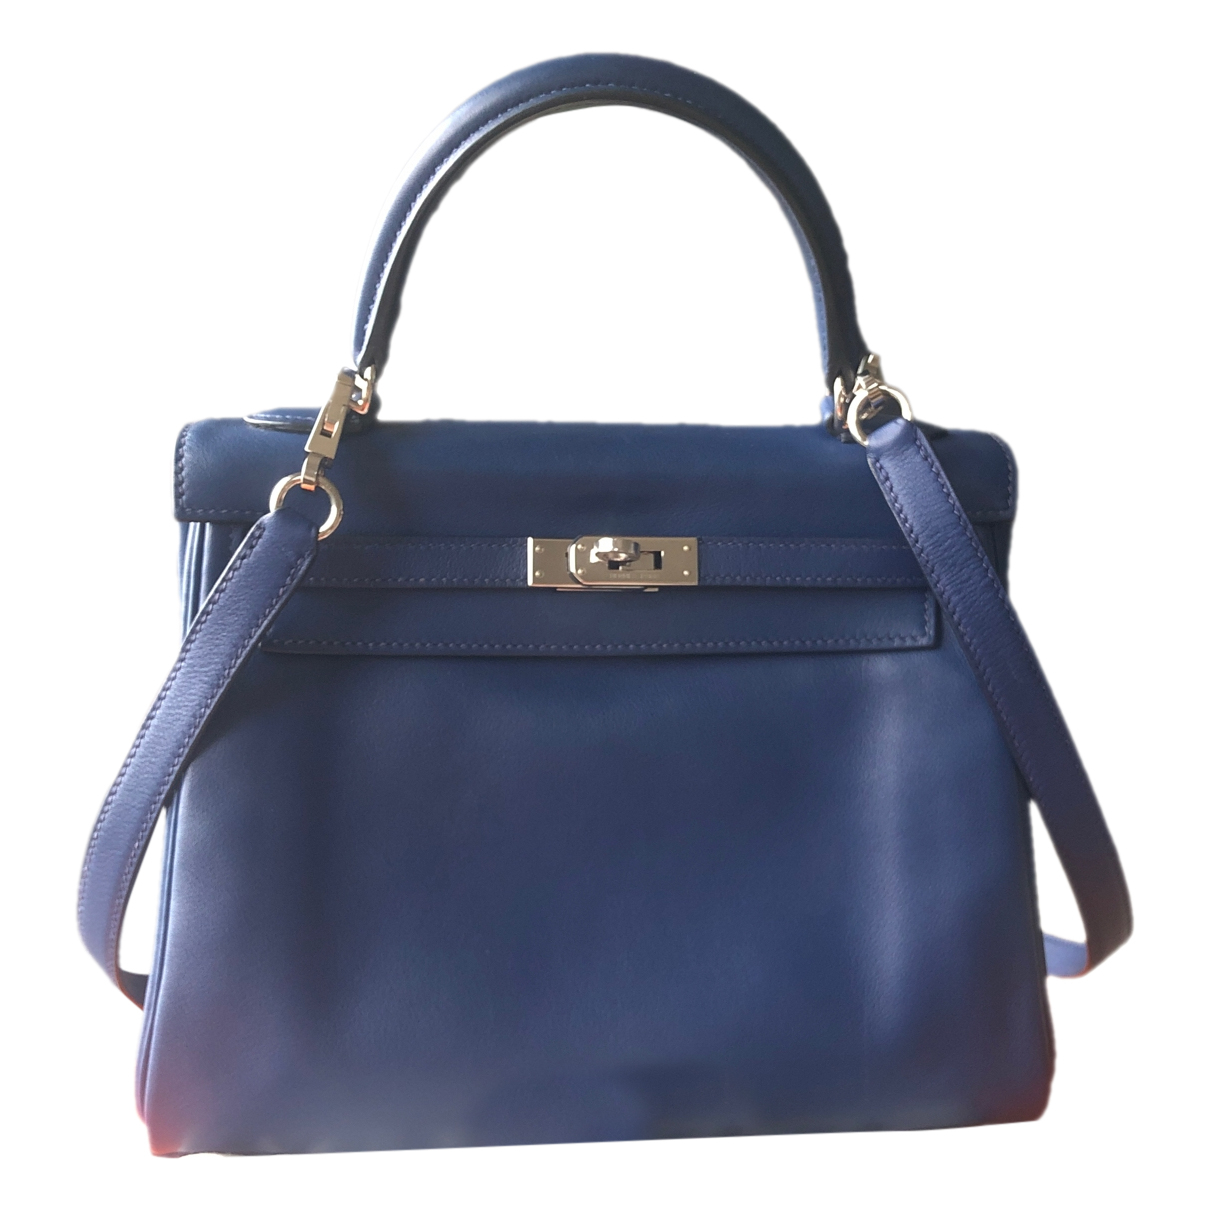 Blue Kelly 25 Leather Handbag